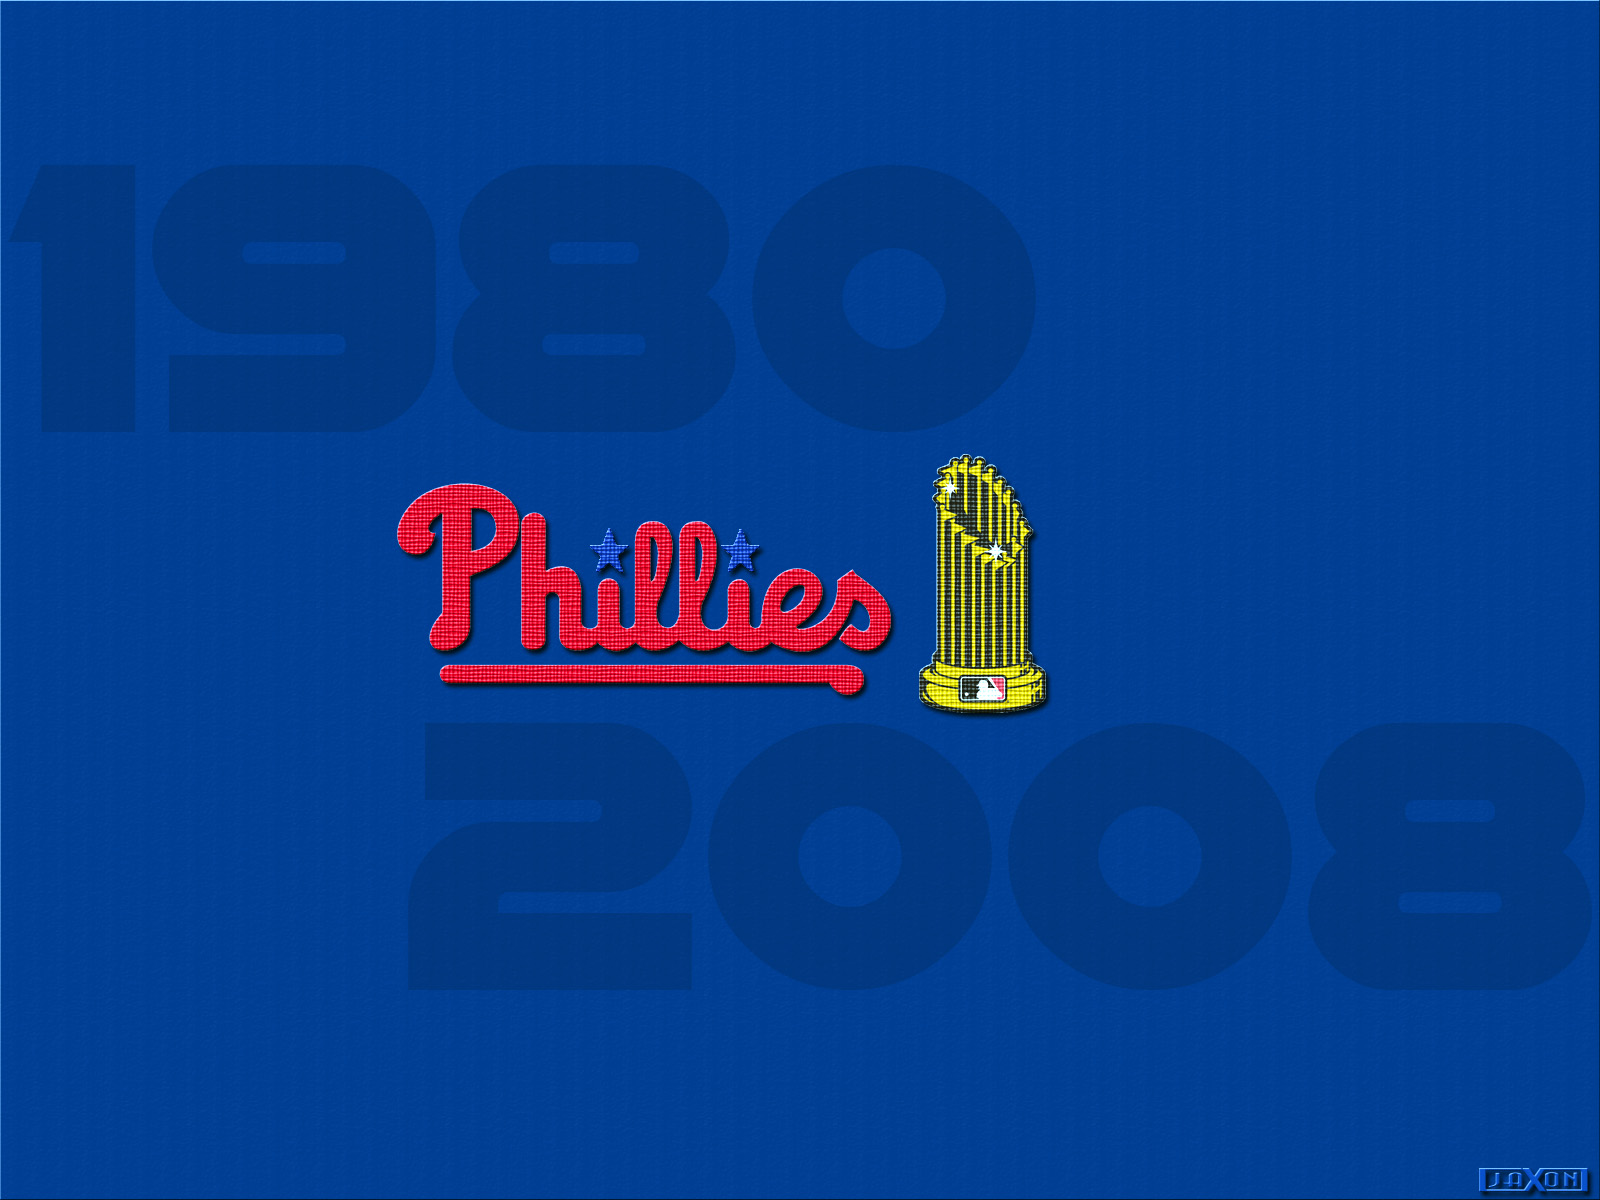 Philadelphia Phillies Wallpaper Background